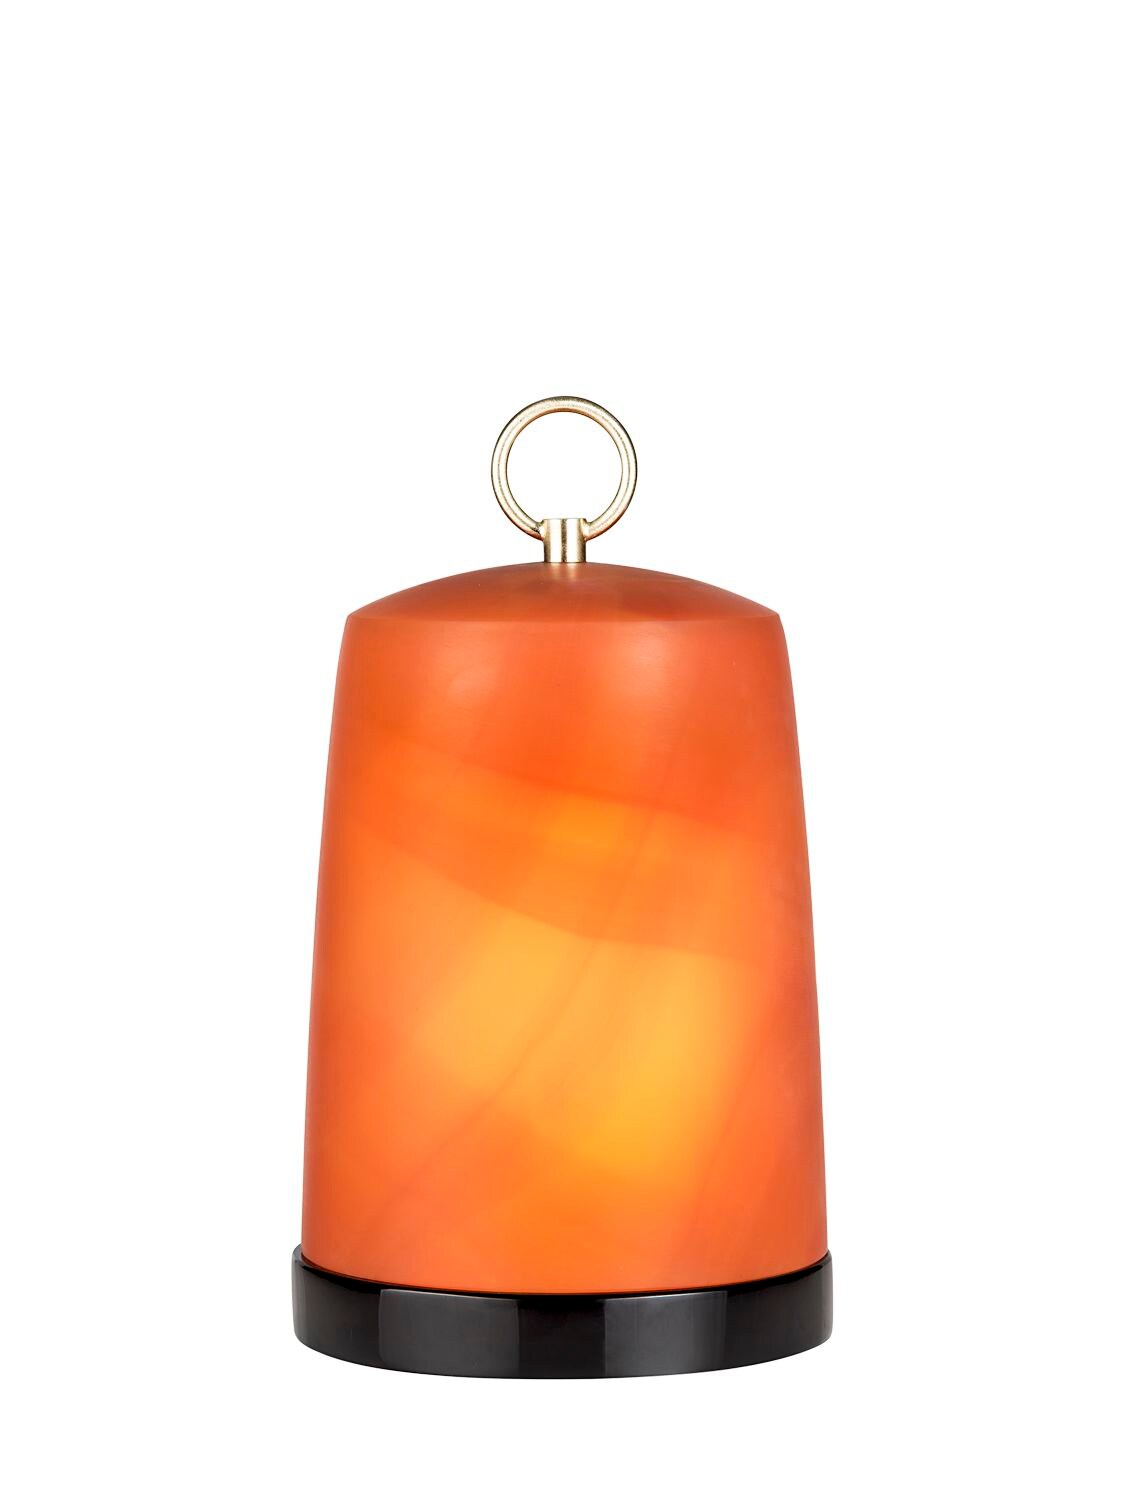 Armani/casa Hack Murano Glass Tealight Holder In Orange